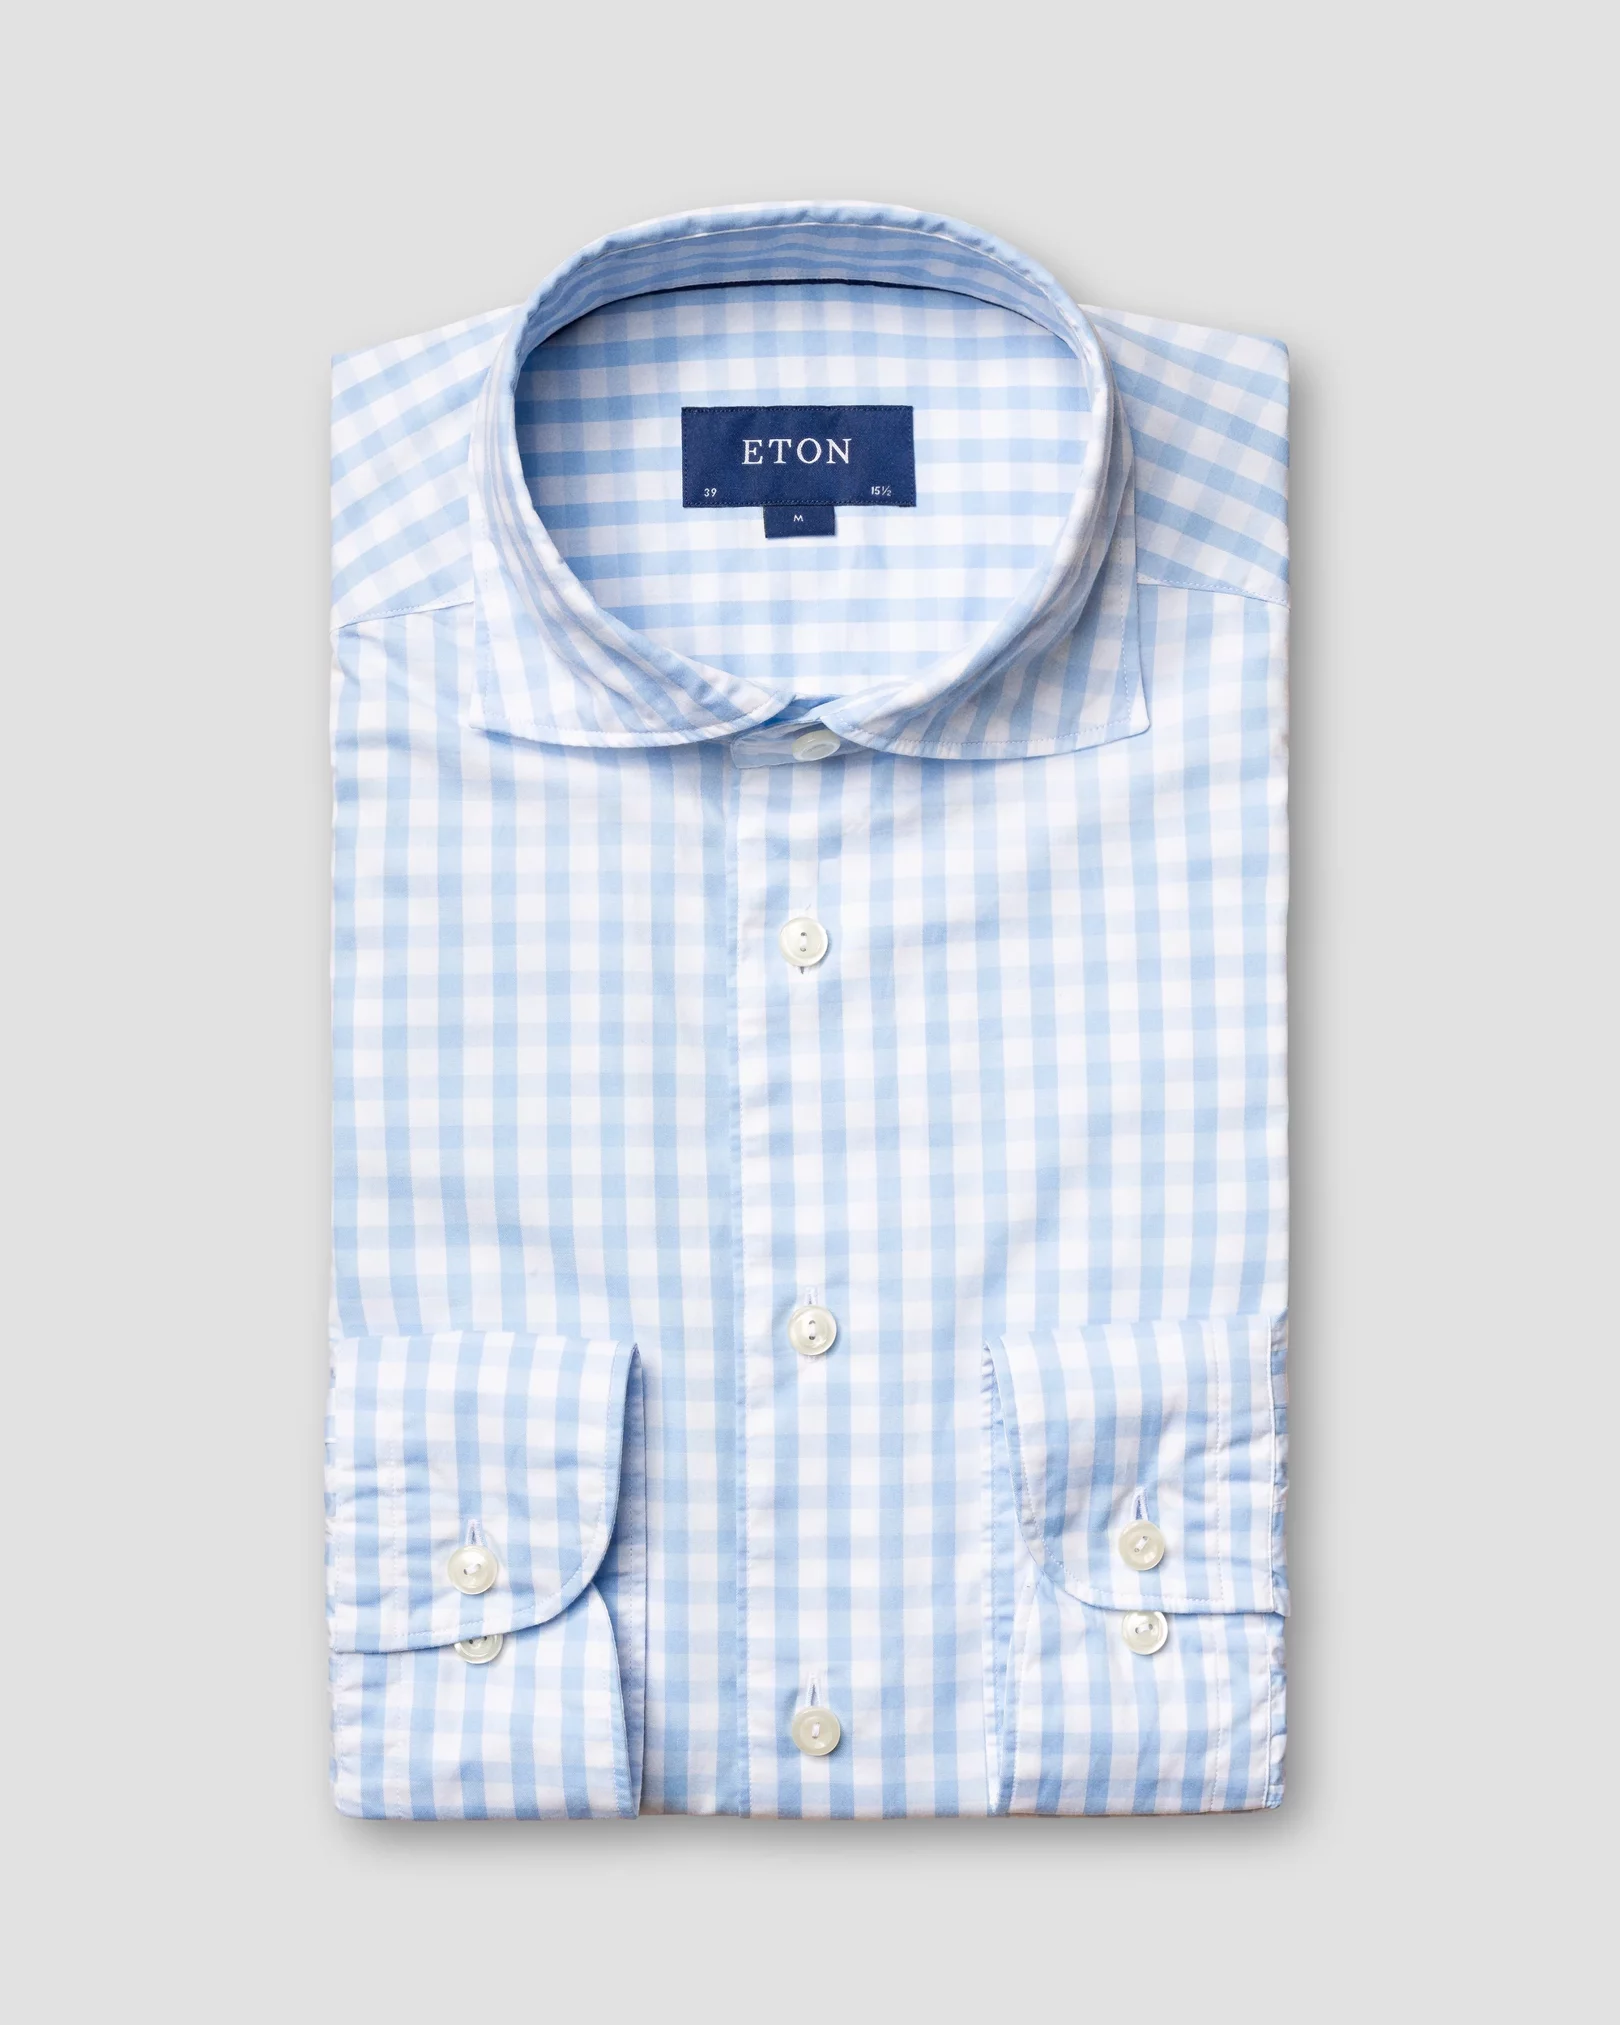 Eton - soft blue gingham check shirt